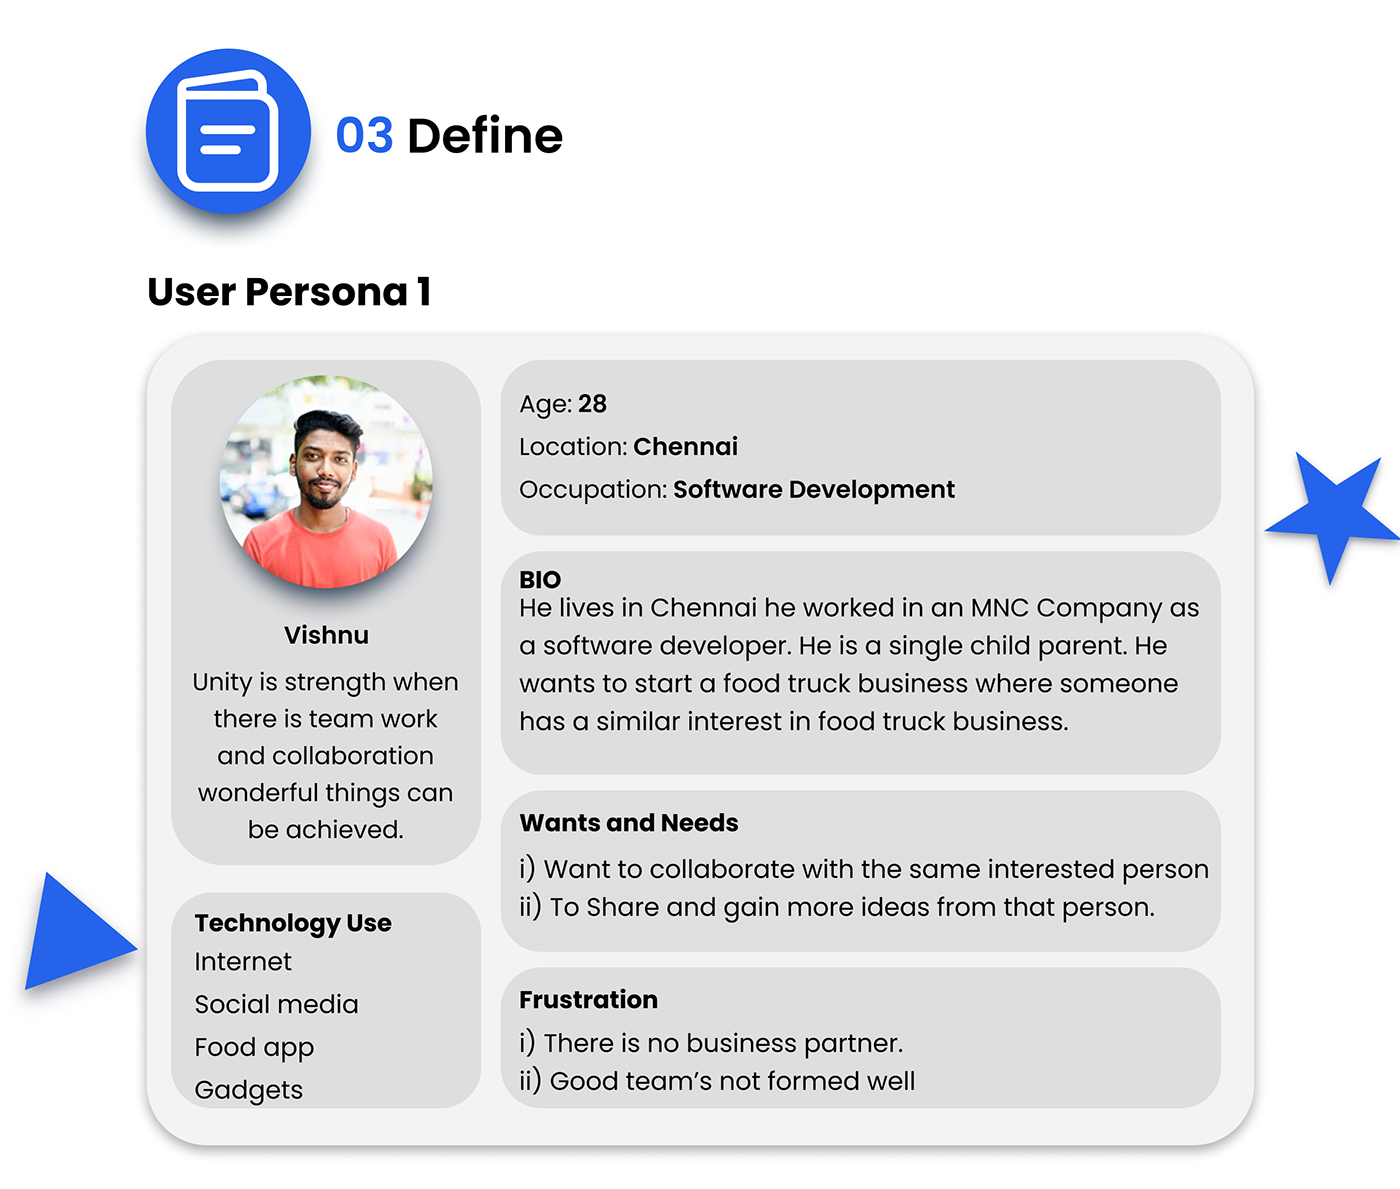 entrepreneur ui ux UI UX Case study UI UX design ui ux designer Mobile Application service service application qwerty Entrepreneur Coaching